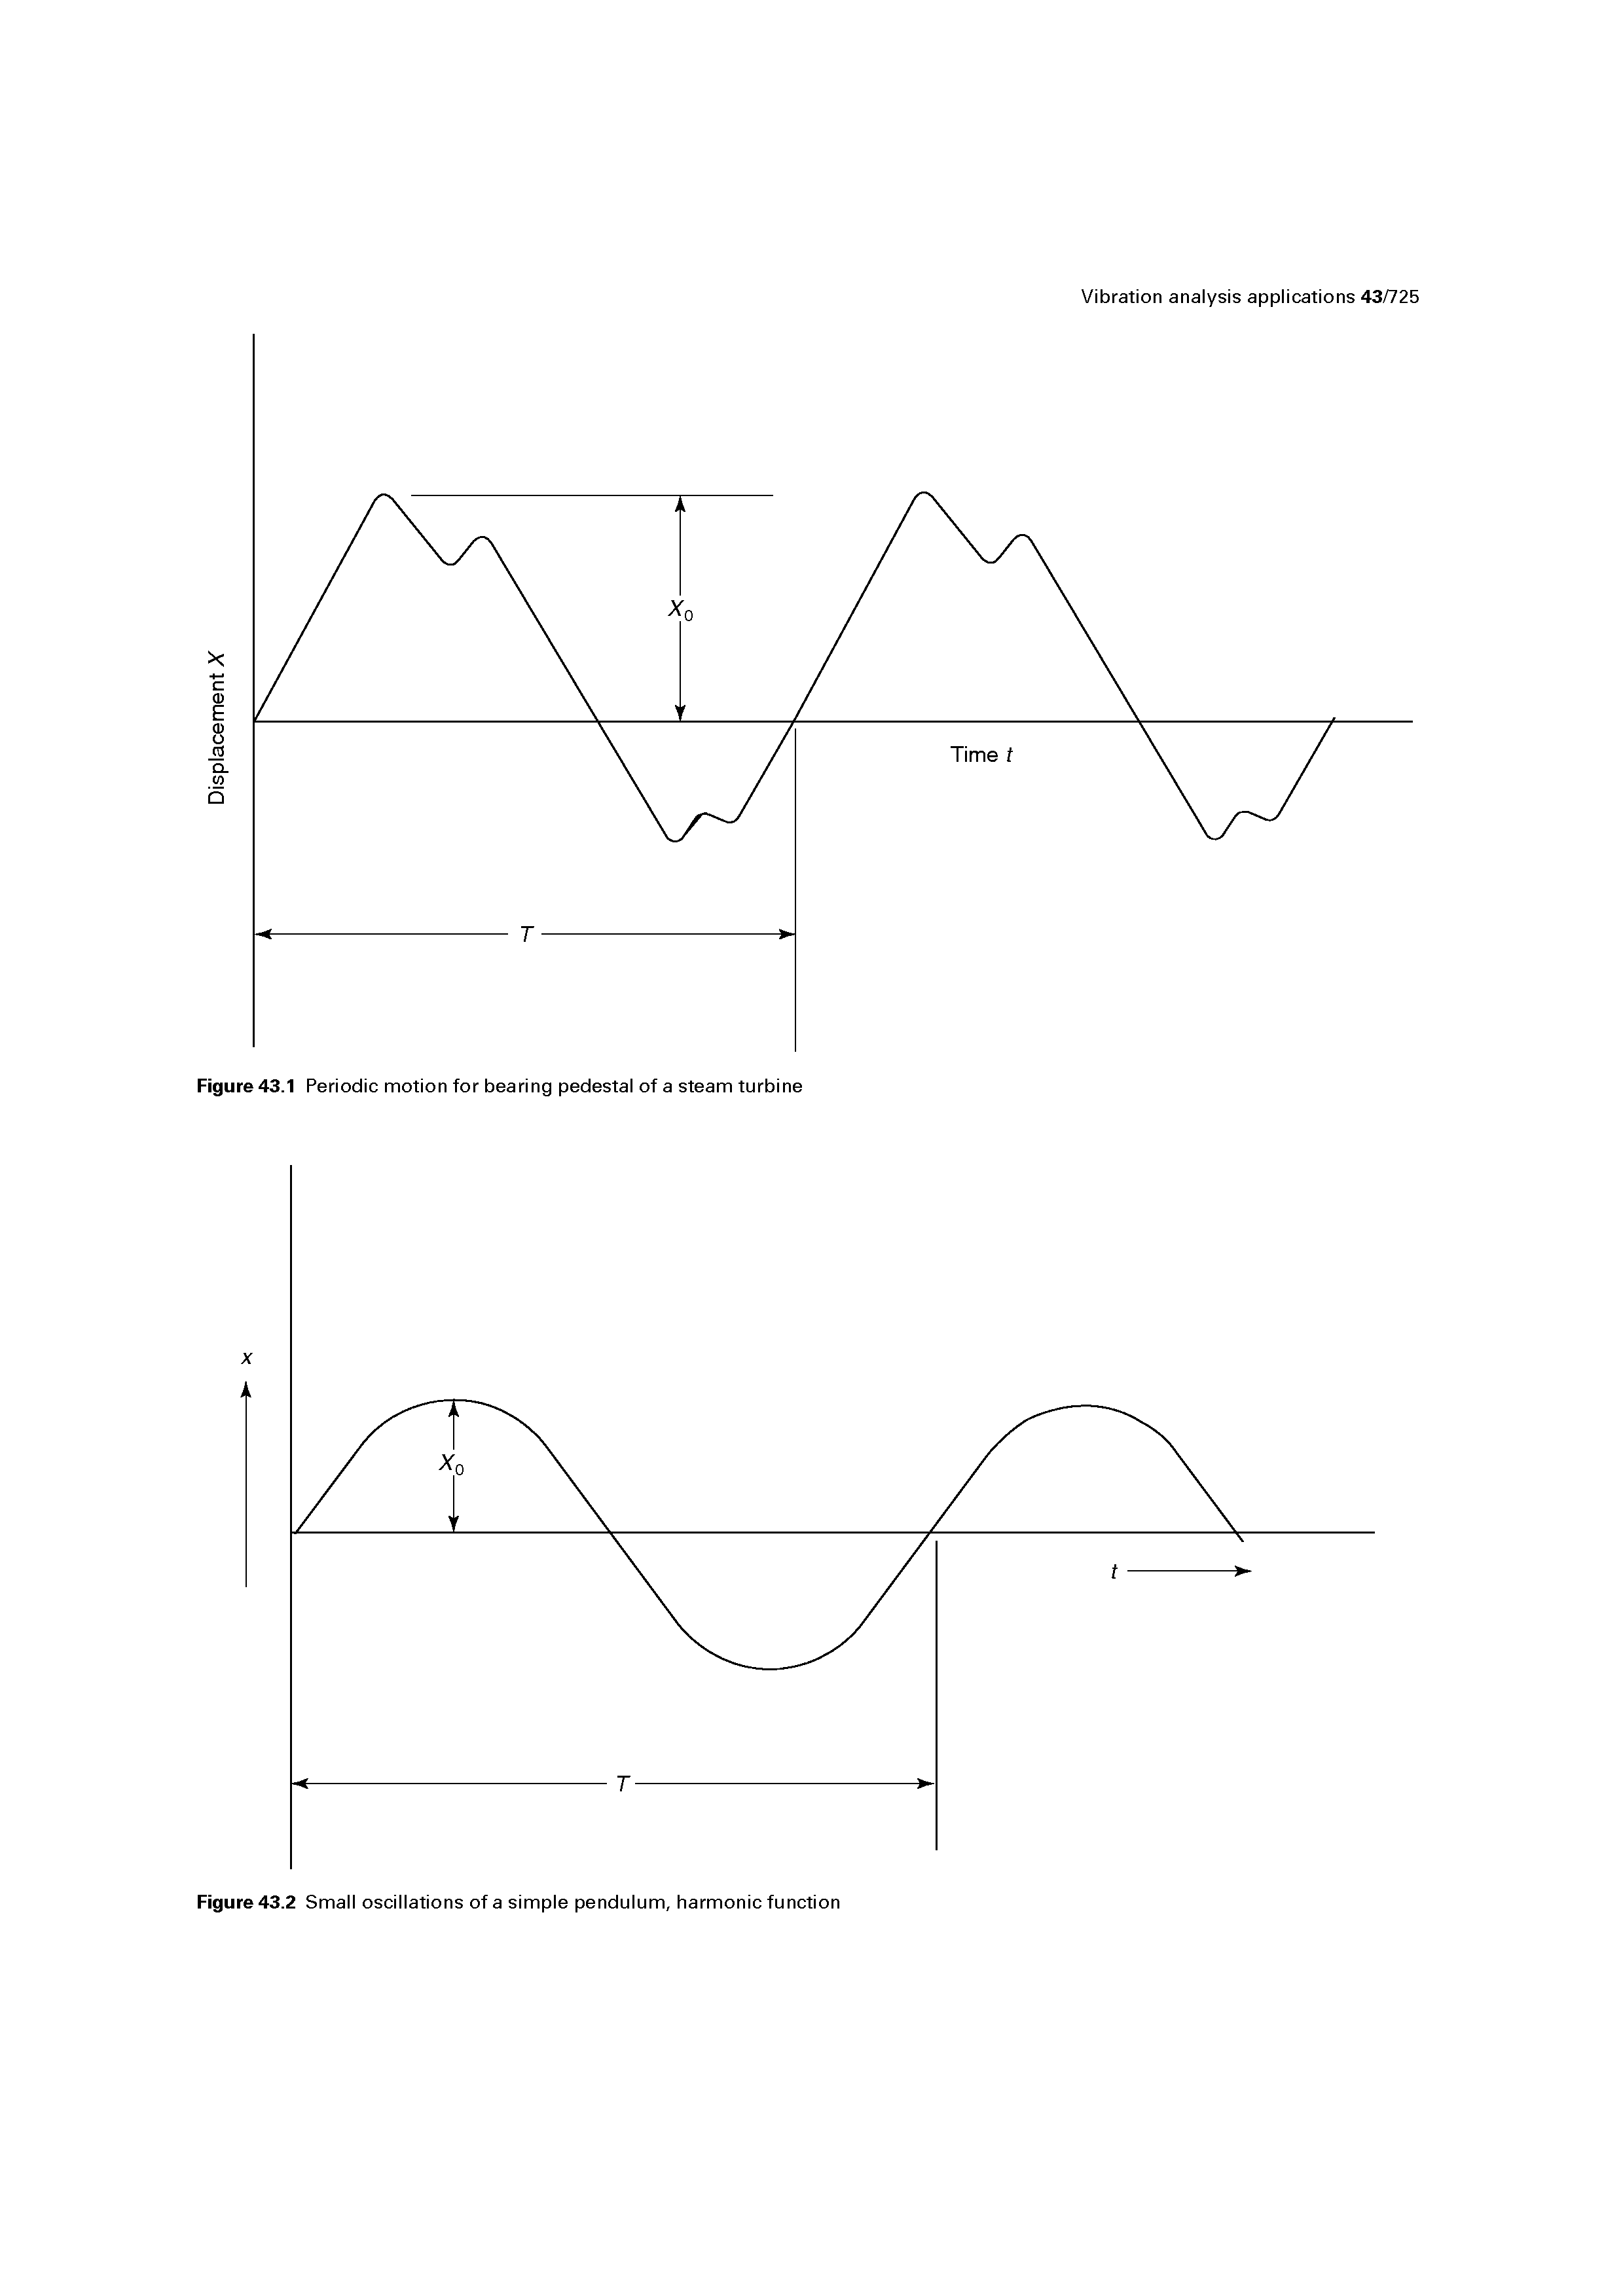 Figure 43.2 Small oscillations of a simple pendulum, harmonic function...